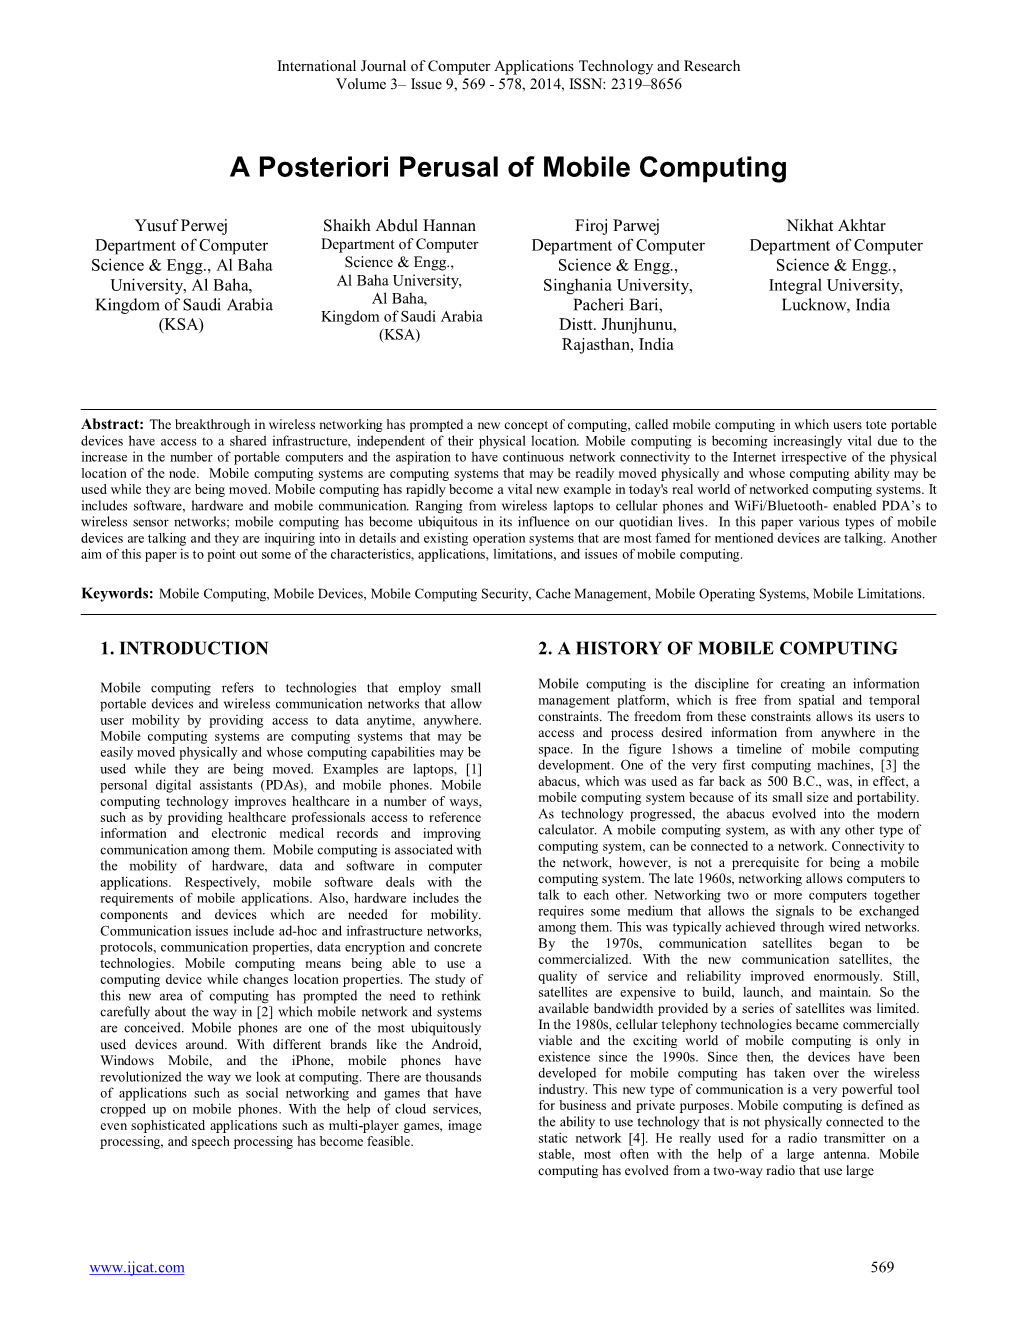 A Posteriori Perusal of Mobile Computing